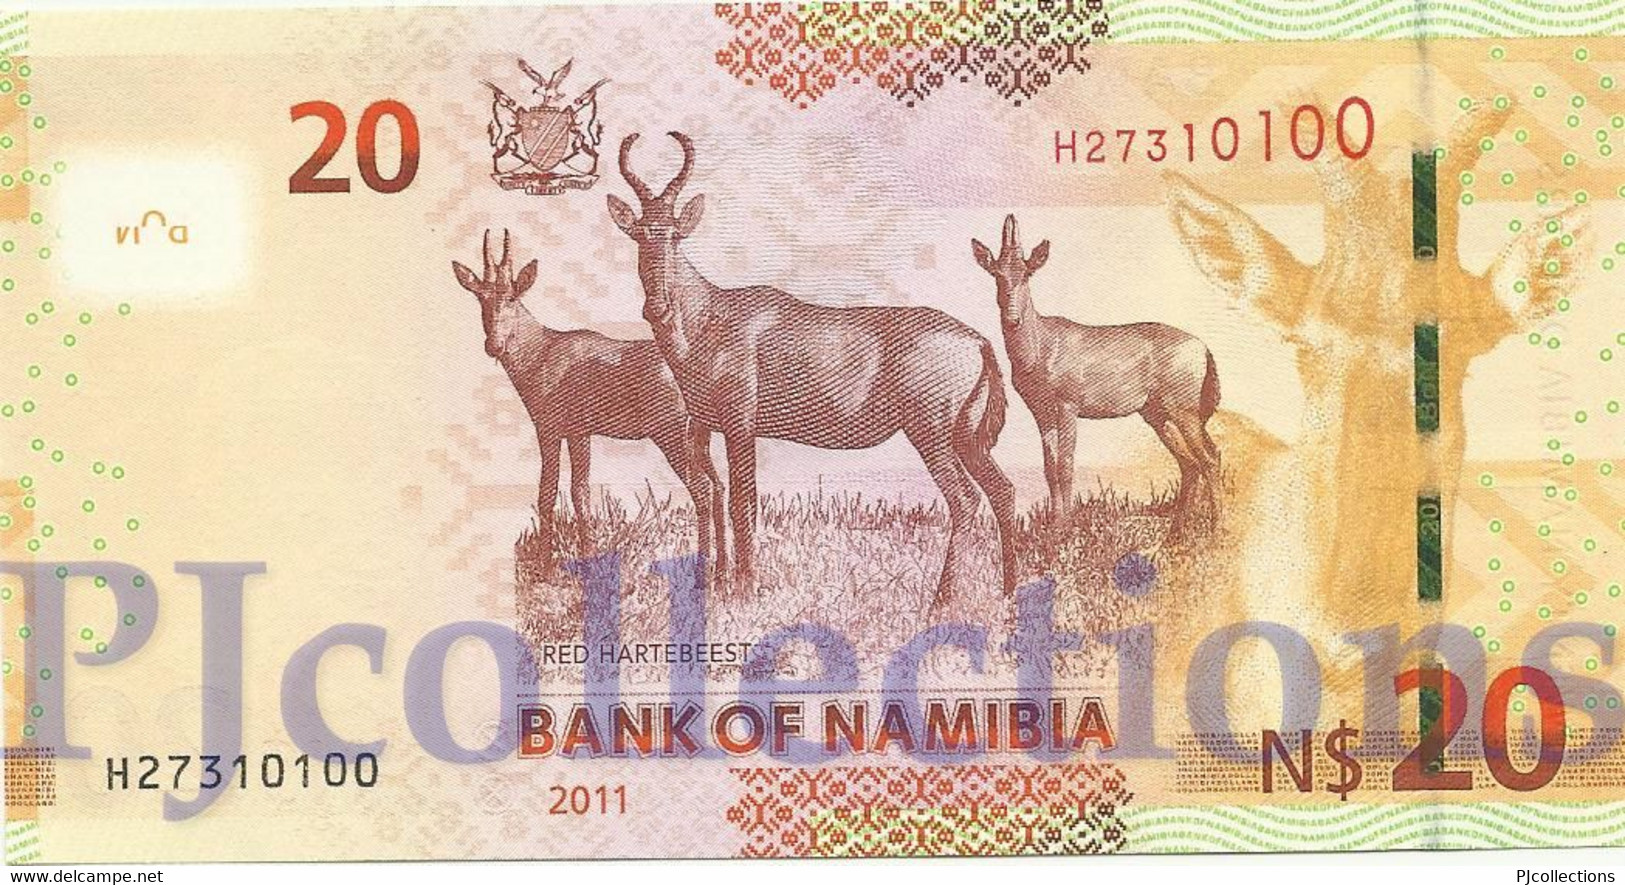 LOT NAMIBIA 20 DOLLARS 2011 PICK 12a UNC X 5 PCS - Namibia